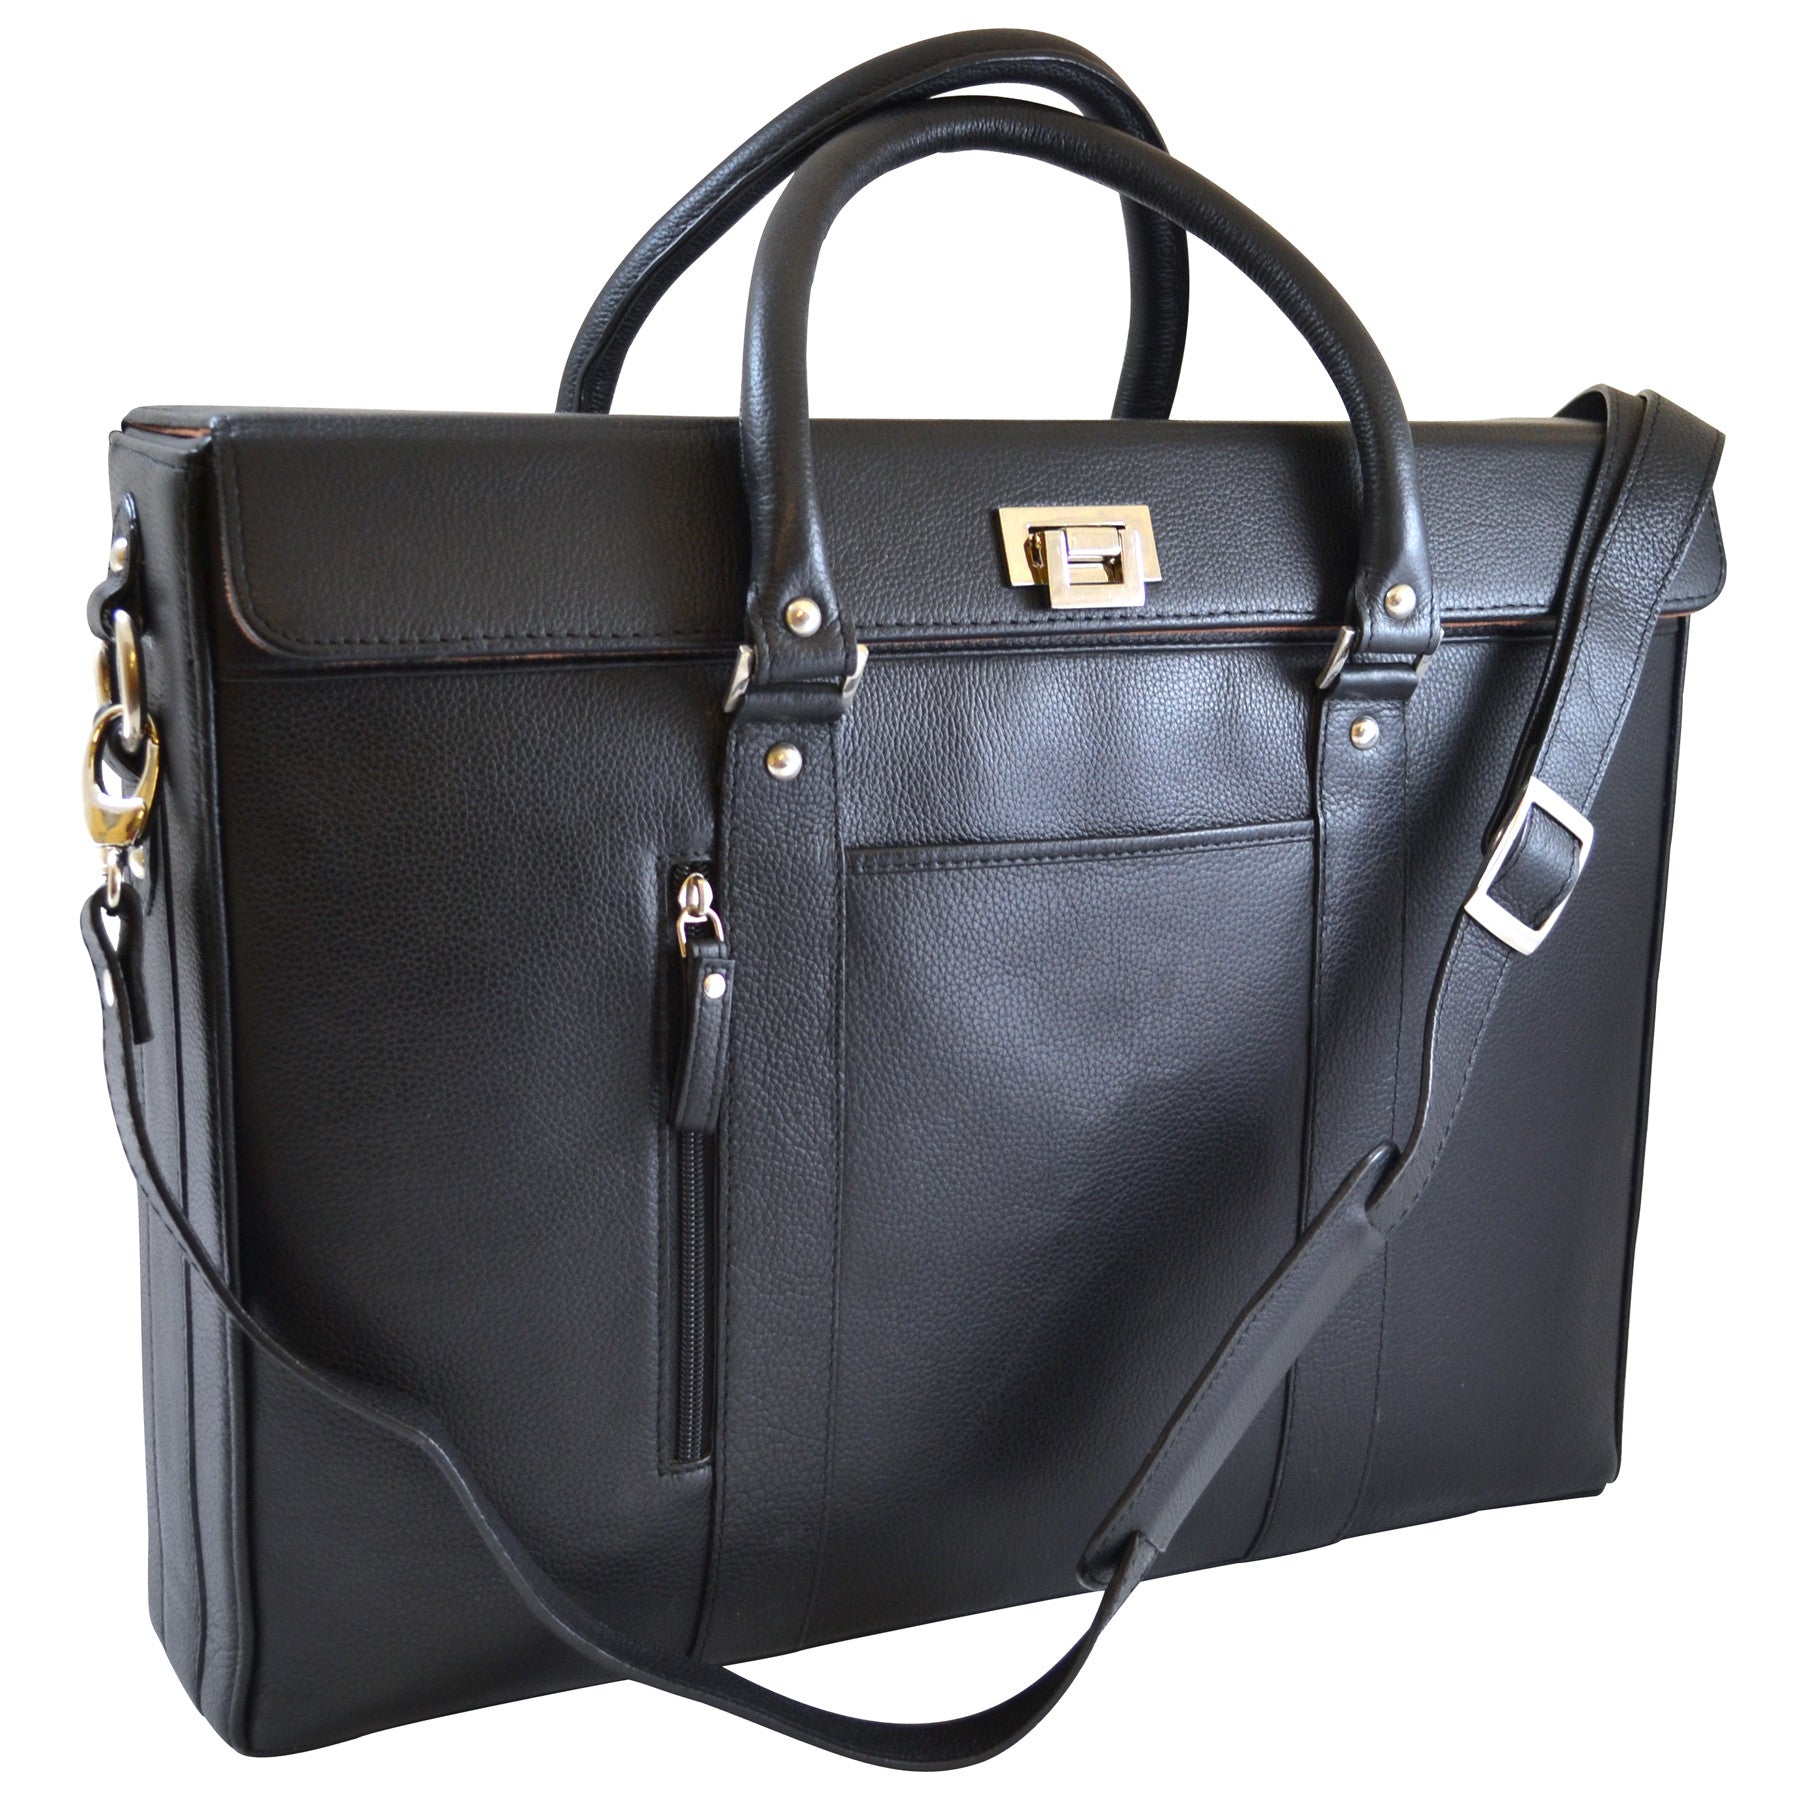 Alicia Klein womens laptop briefcase, Hollywood Tote, black